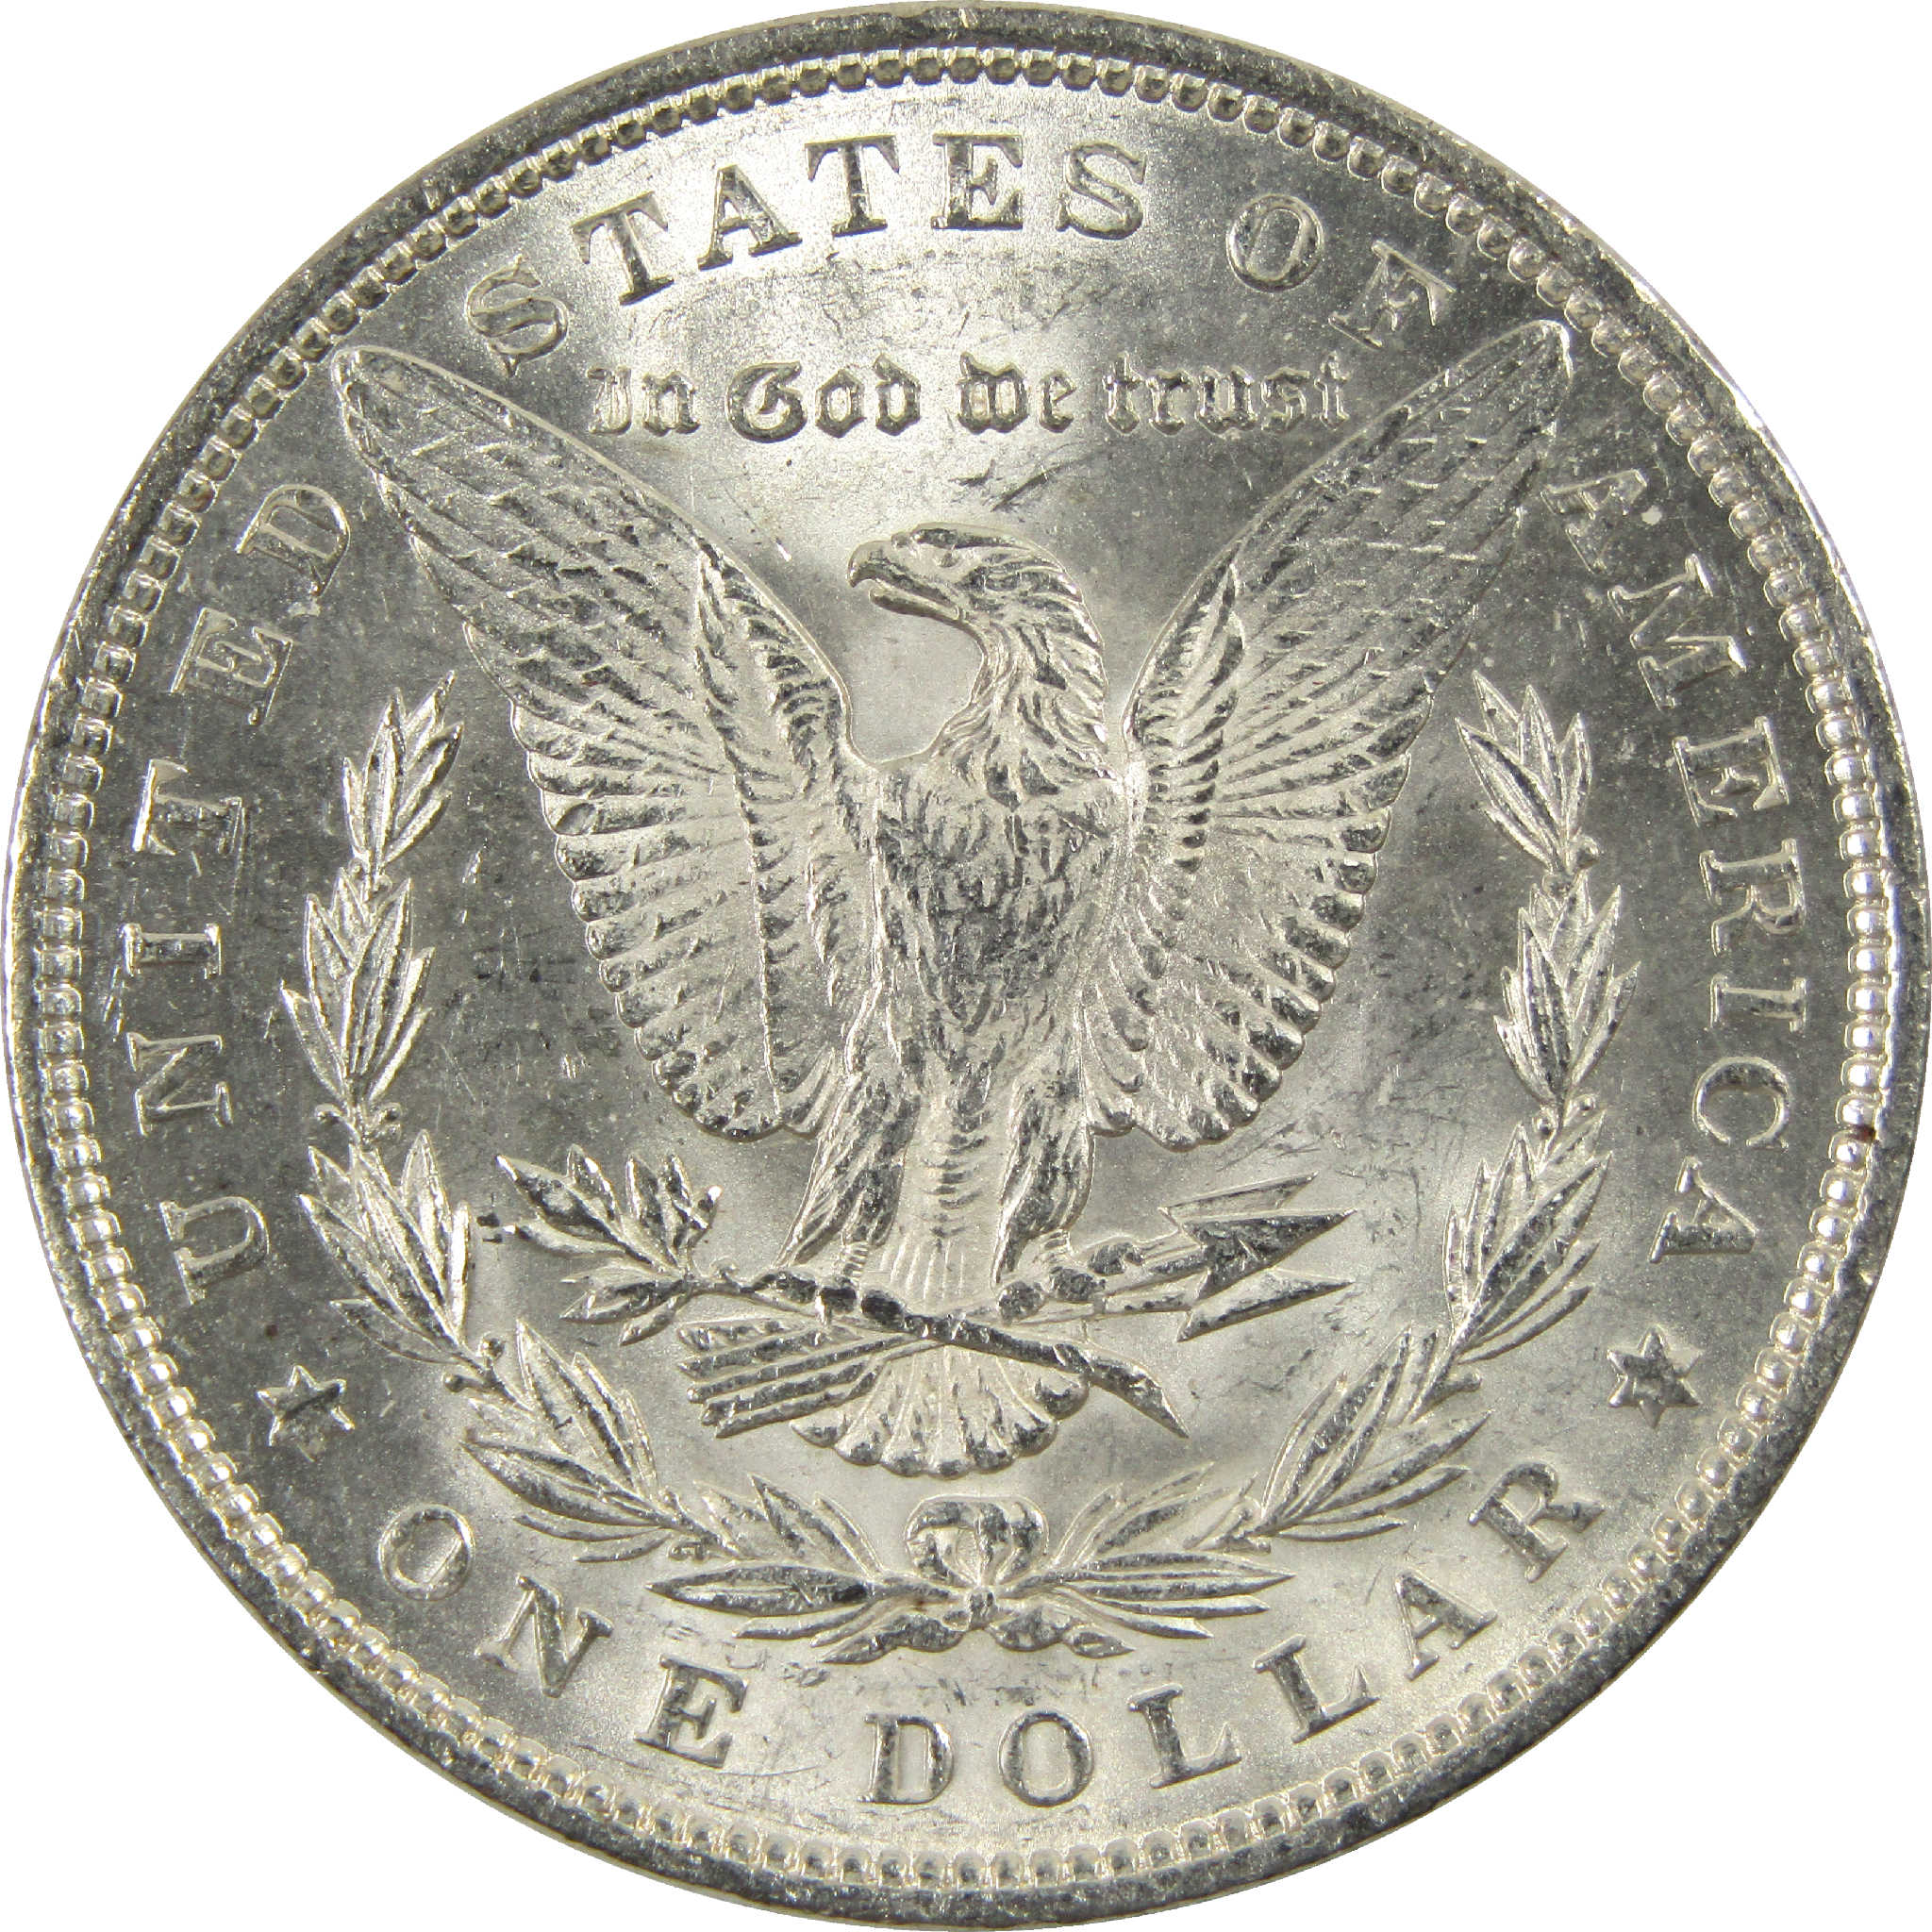 1888 Morgan Dollar CH AU Choice About Uncirculated Silver $1 Coin - Morgan coin - Morgan silver dollar - Morgan silver dollar for sale - Profile Coins &amp; Collectibles